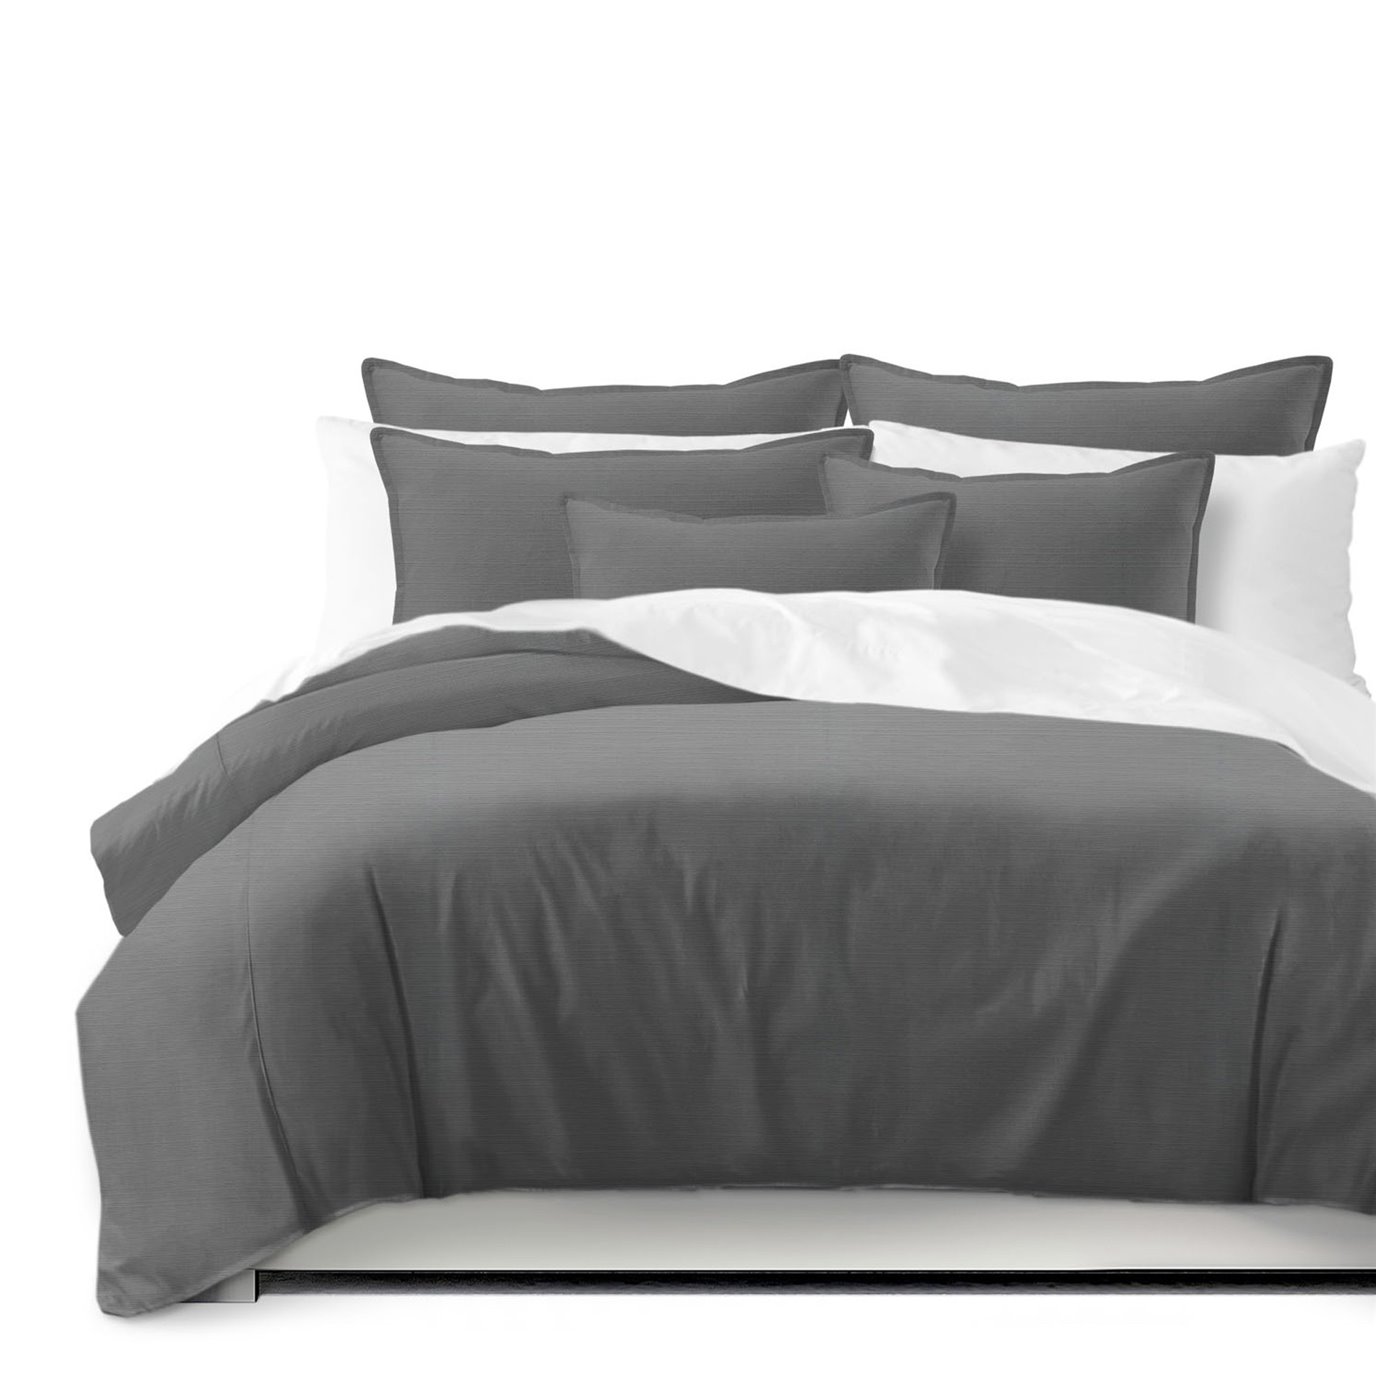 Nova Charcoal Comforter and Pillow Sham(s) Set - Size Super Queen